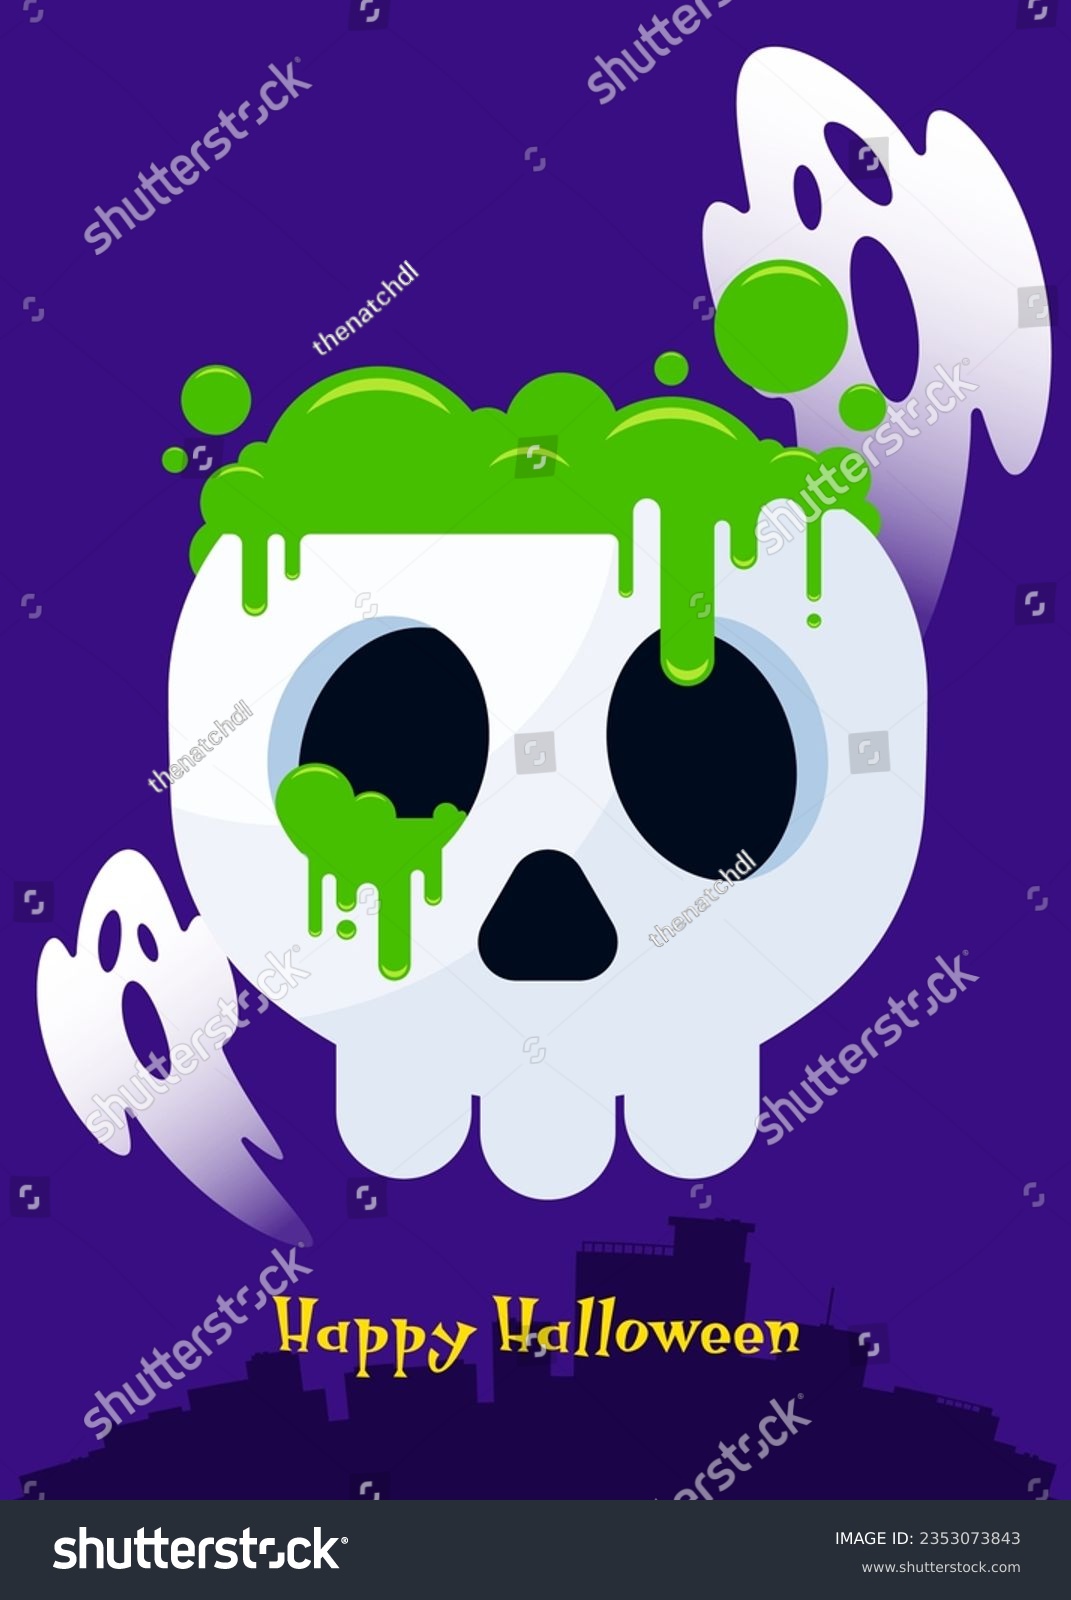 Happy halloween party invitation template design background decorative with skull flat design style. Design element for poster, banner, leaflet, flyer, vector illustration #2353073843